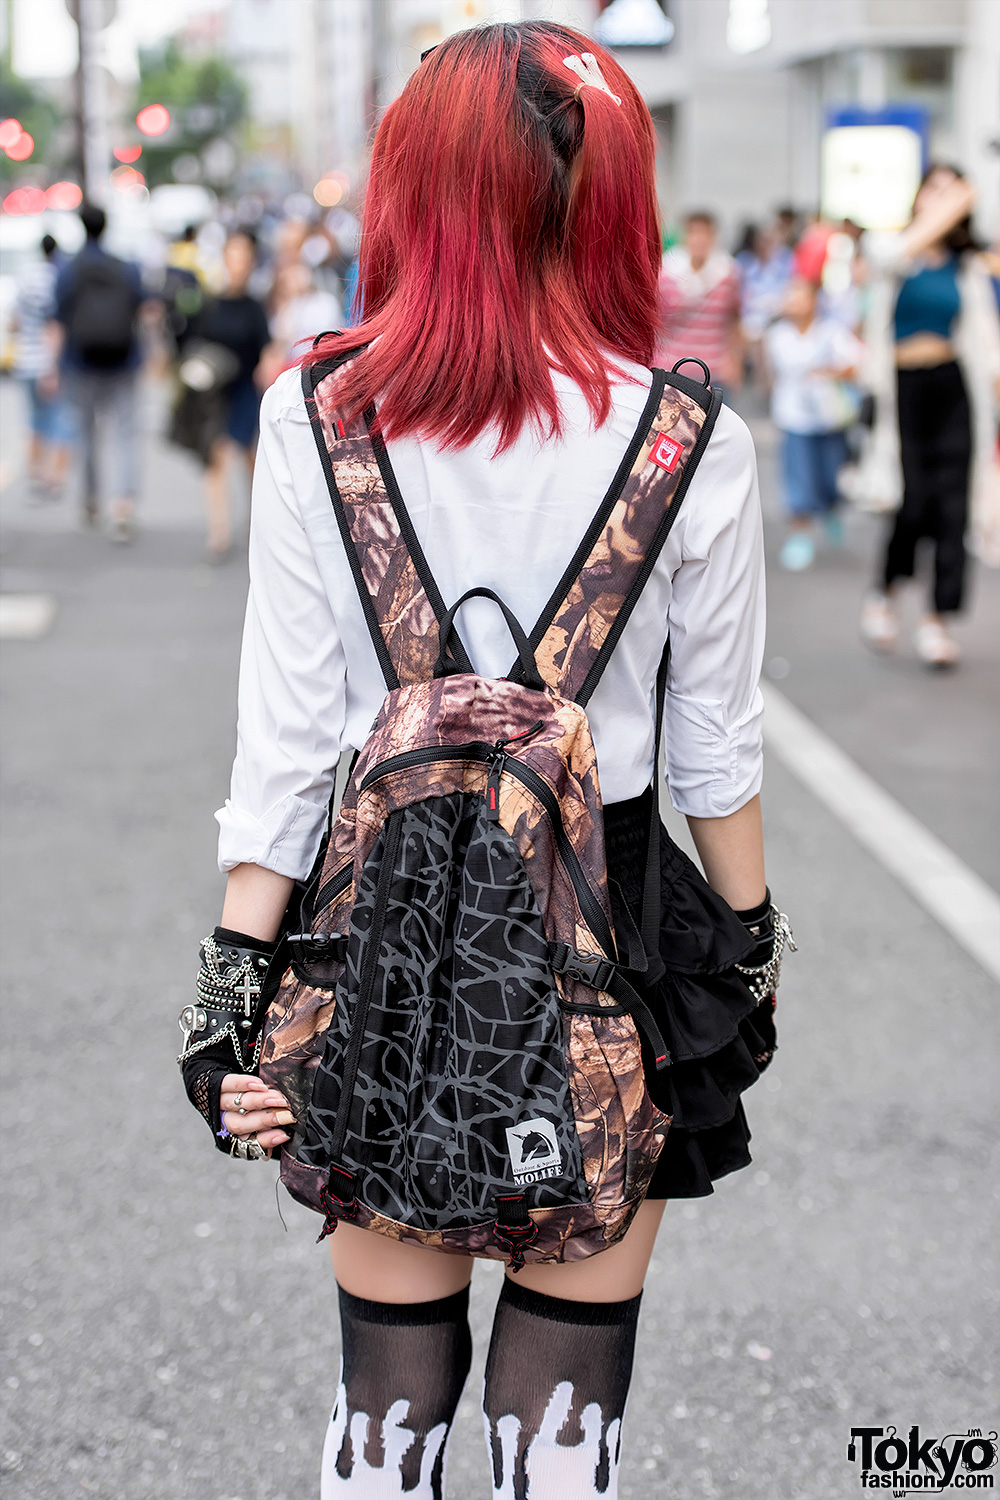 Harajuku Goth Girl w/ Pink Hair, Bell Choker, Demonia Platforms